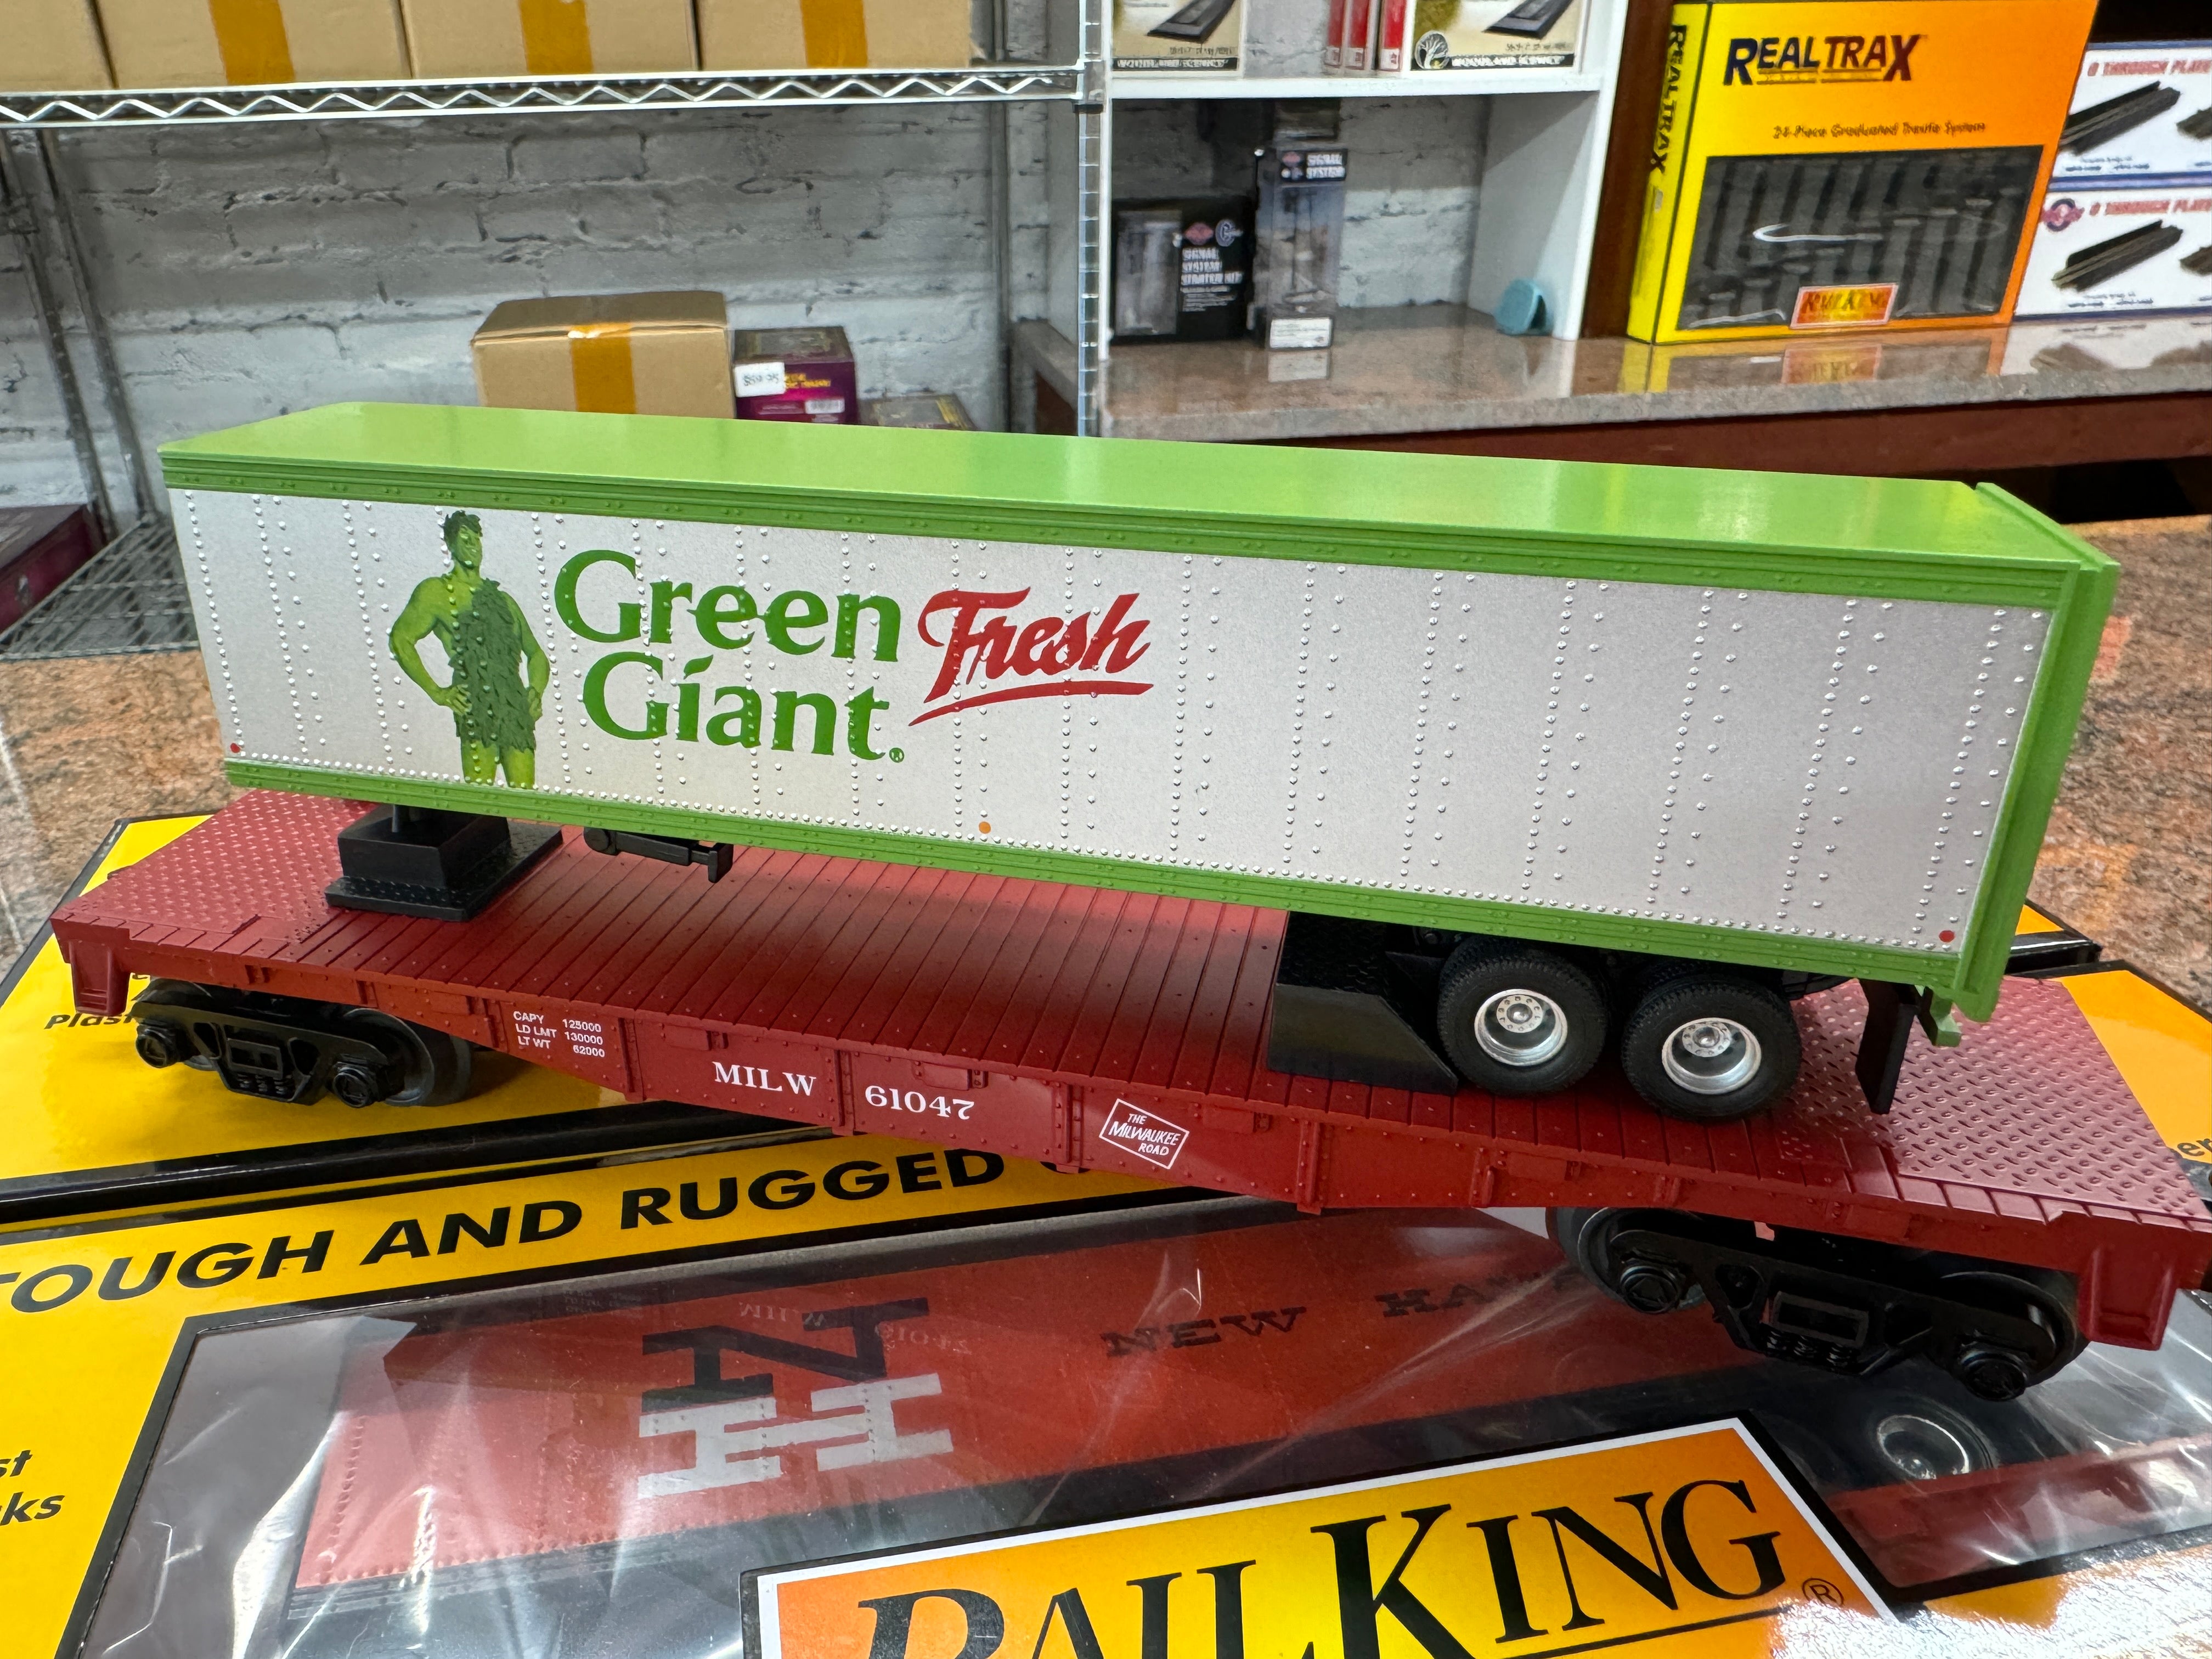 MTH 30-76894 - Flat Car "Milwaukee Road" w/ 40’ Trailer #61047 (Green Giant)